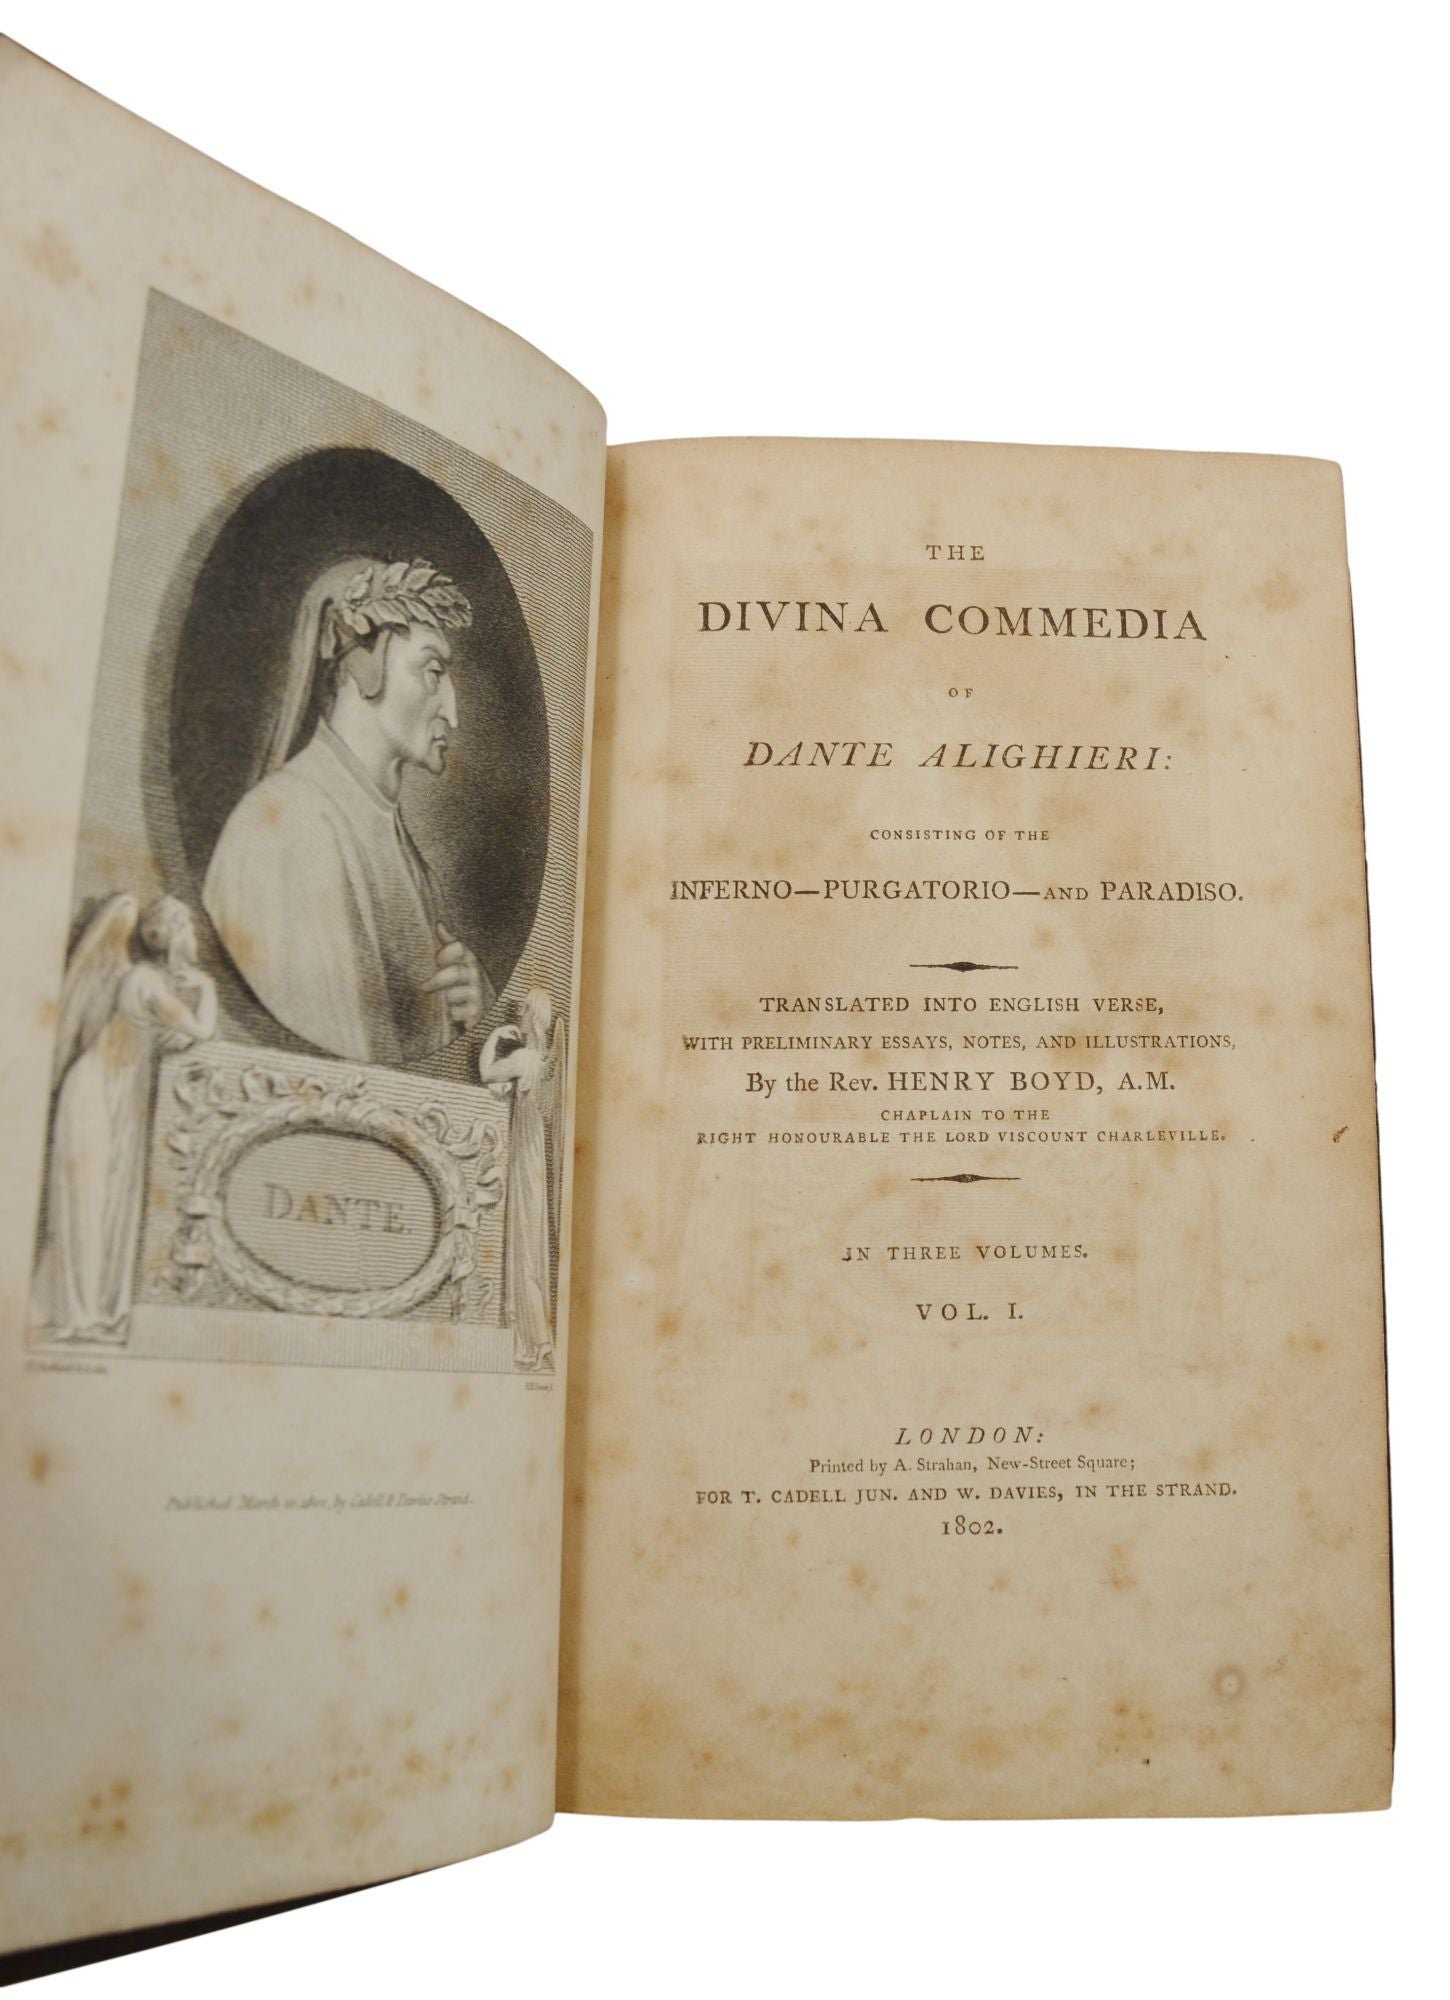 The Divina Commedia of Dante Alighieri, Consisting of the Inferno -  Purgatorio - and Paradiso, Dante Alighieri, Rev. Henry Boyd